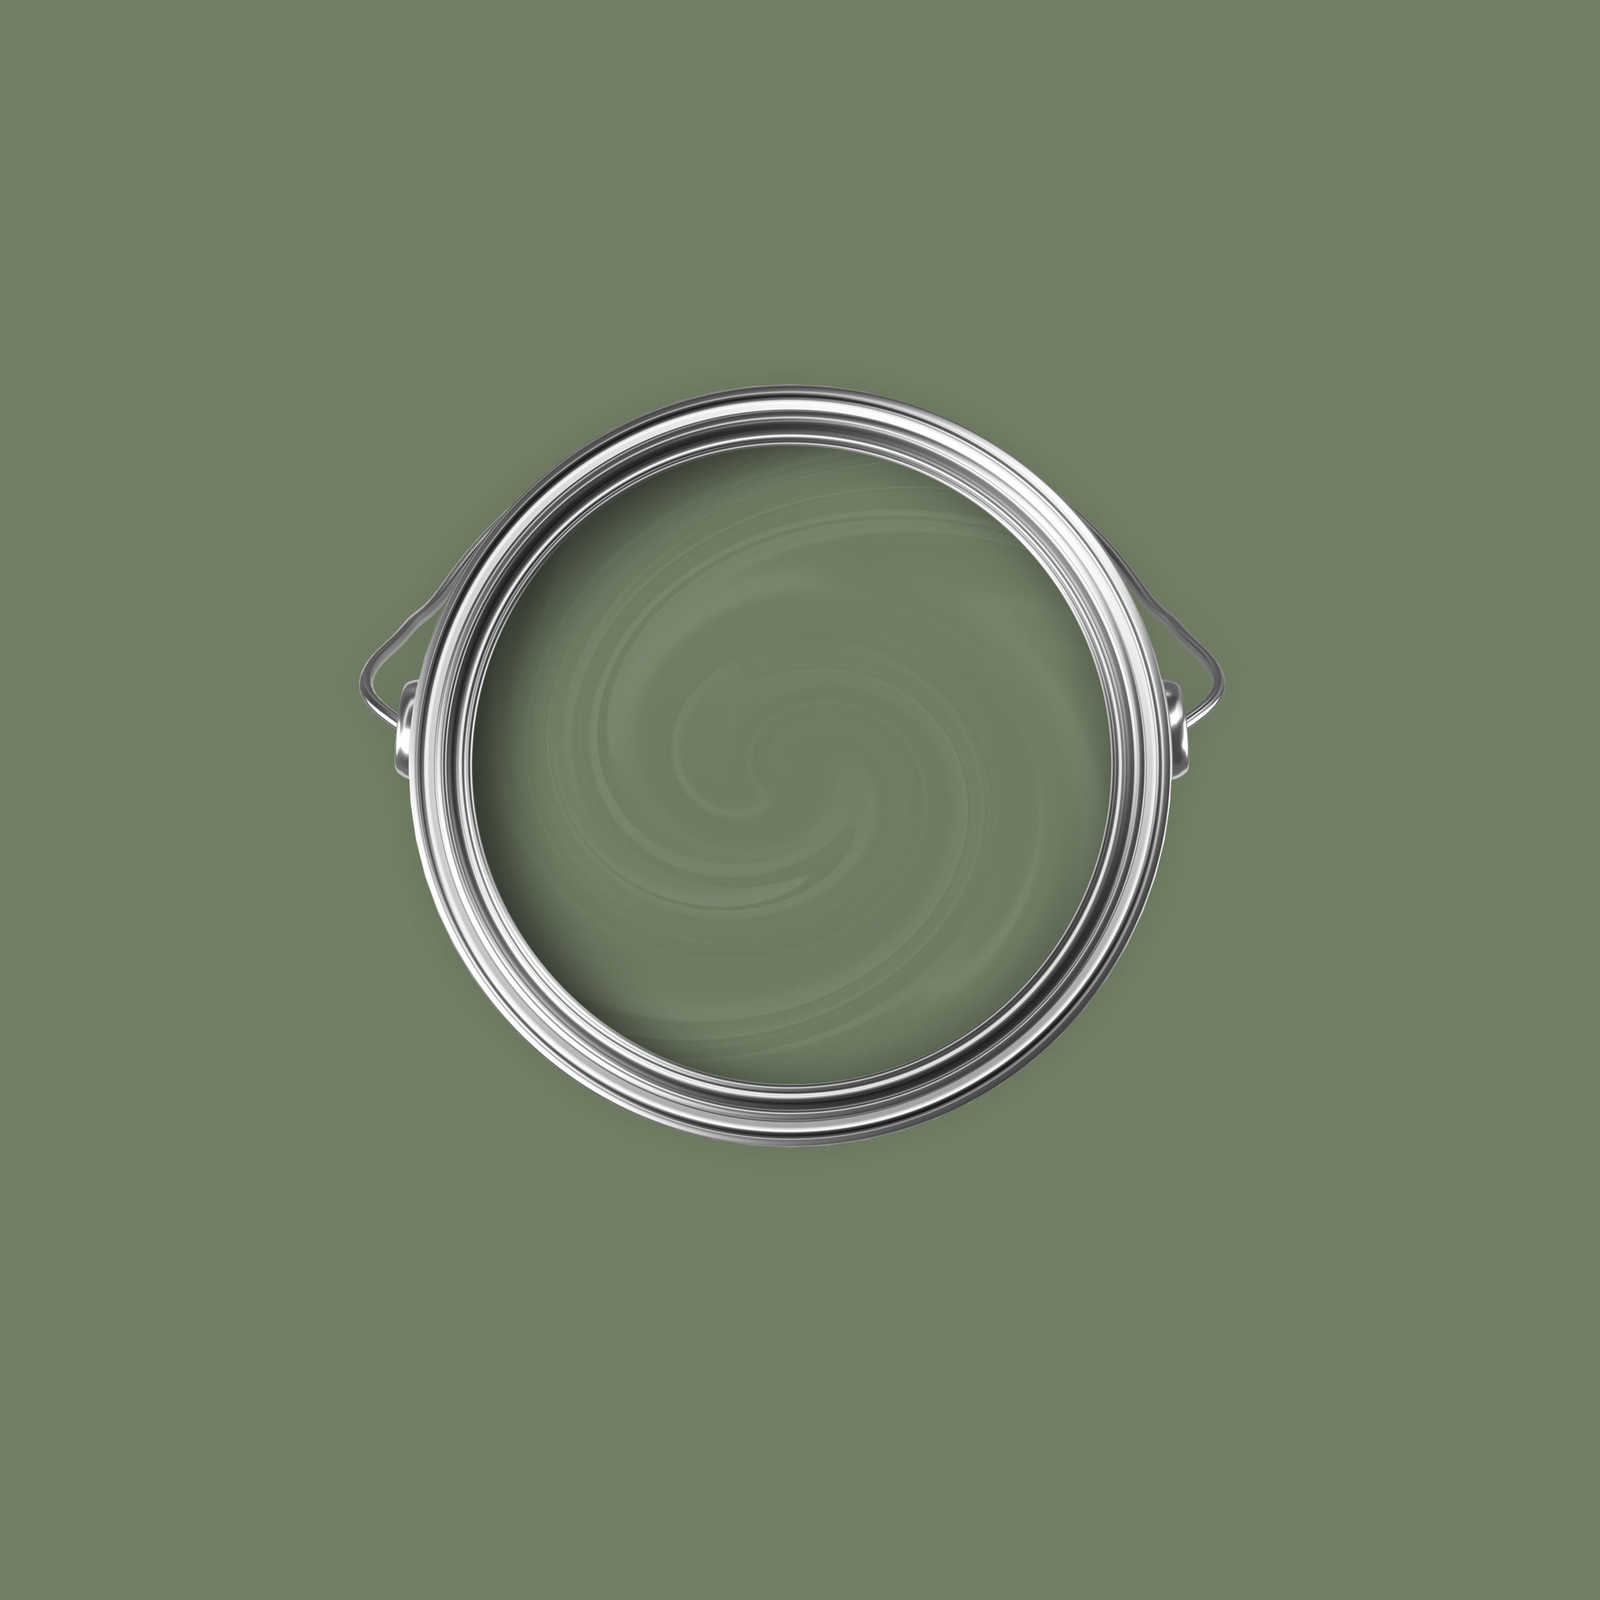             Pintura mural Premium relajante verde oliva »Gorgeous Green« NW504 – 2,5 litro
        